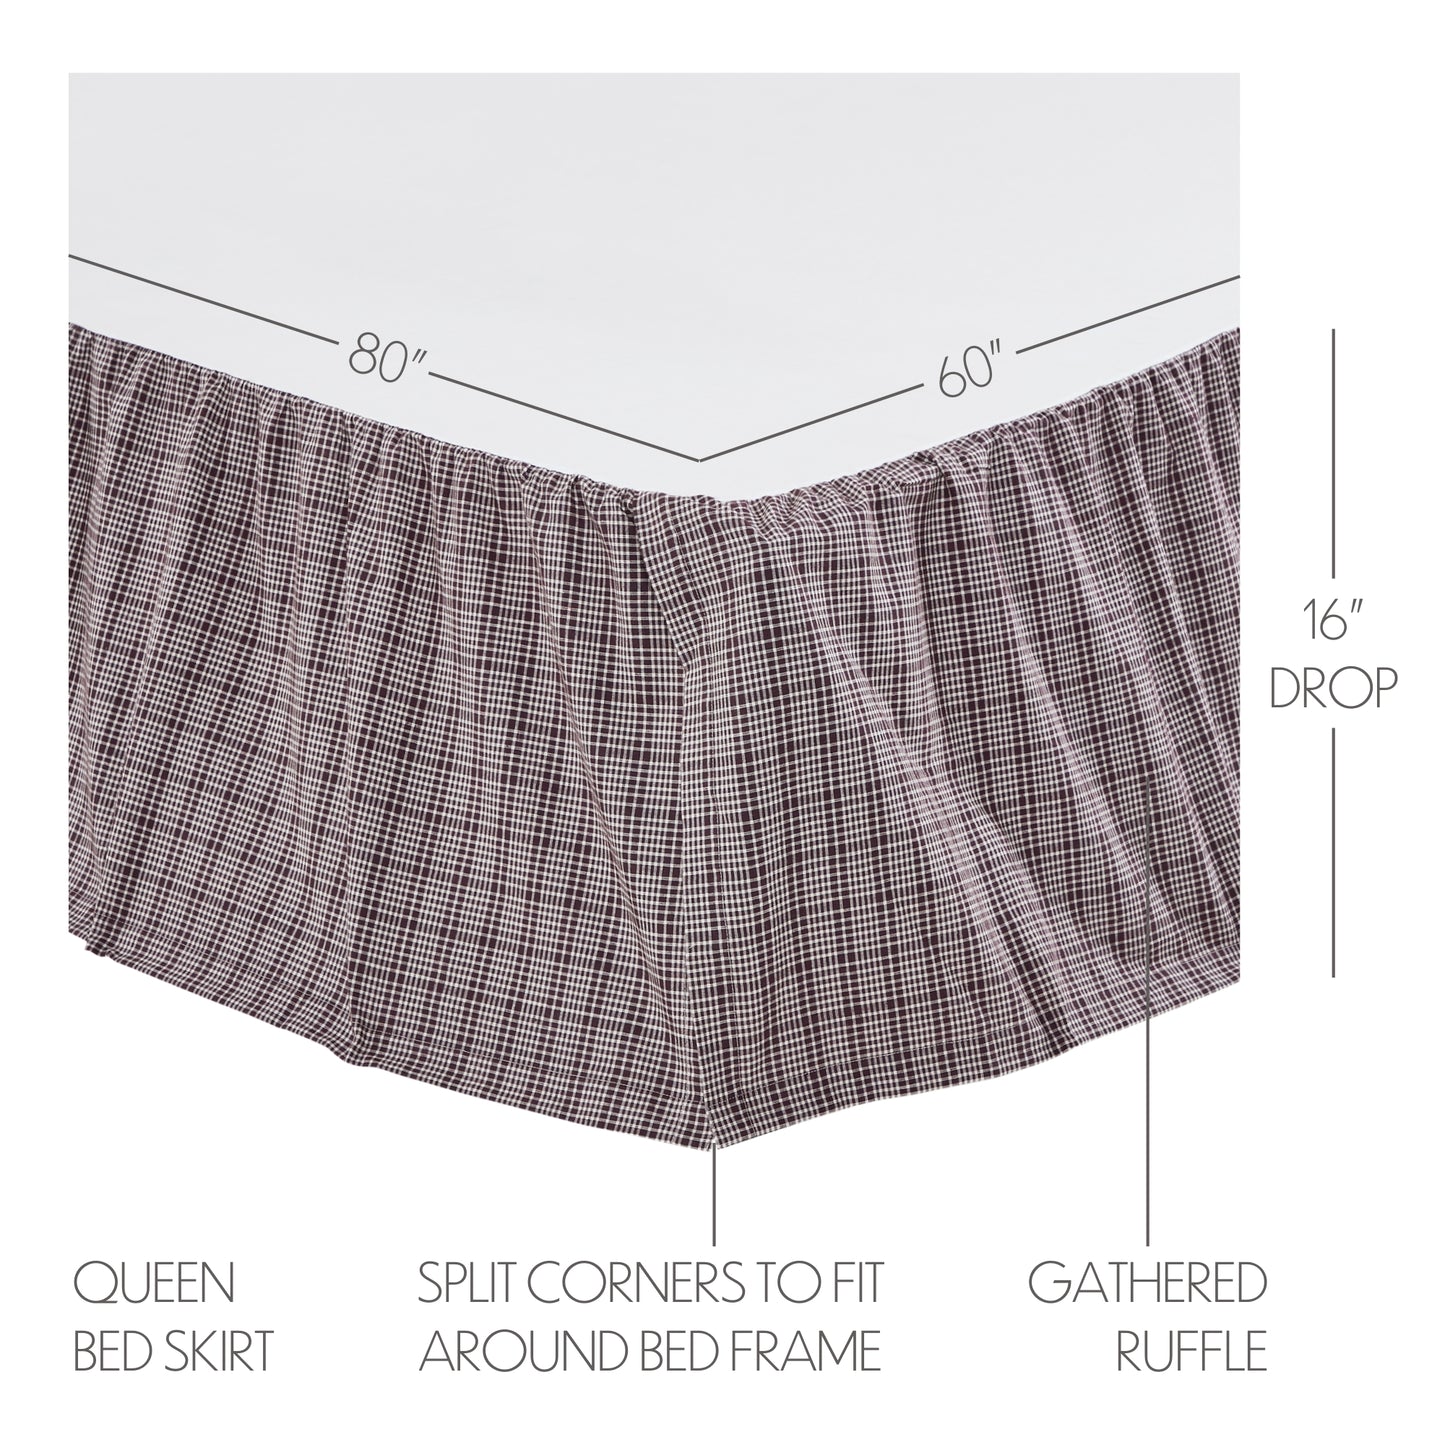 80350-Florette-Queen-Bed-Skirt-60x80x16-image-1